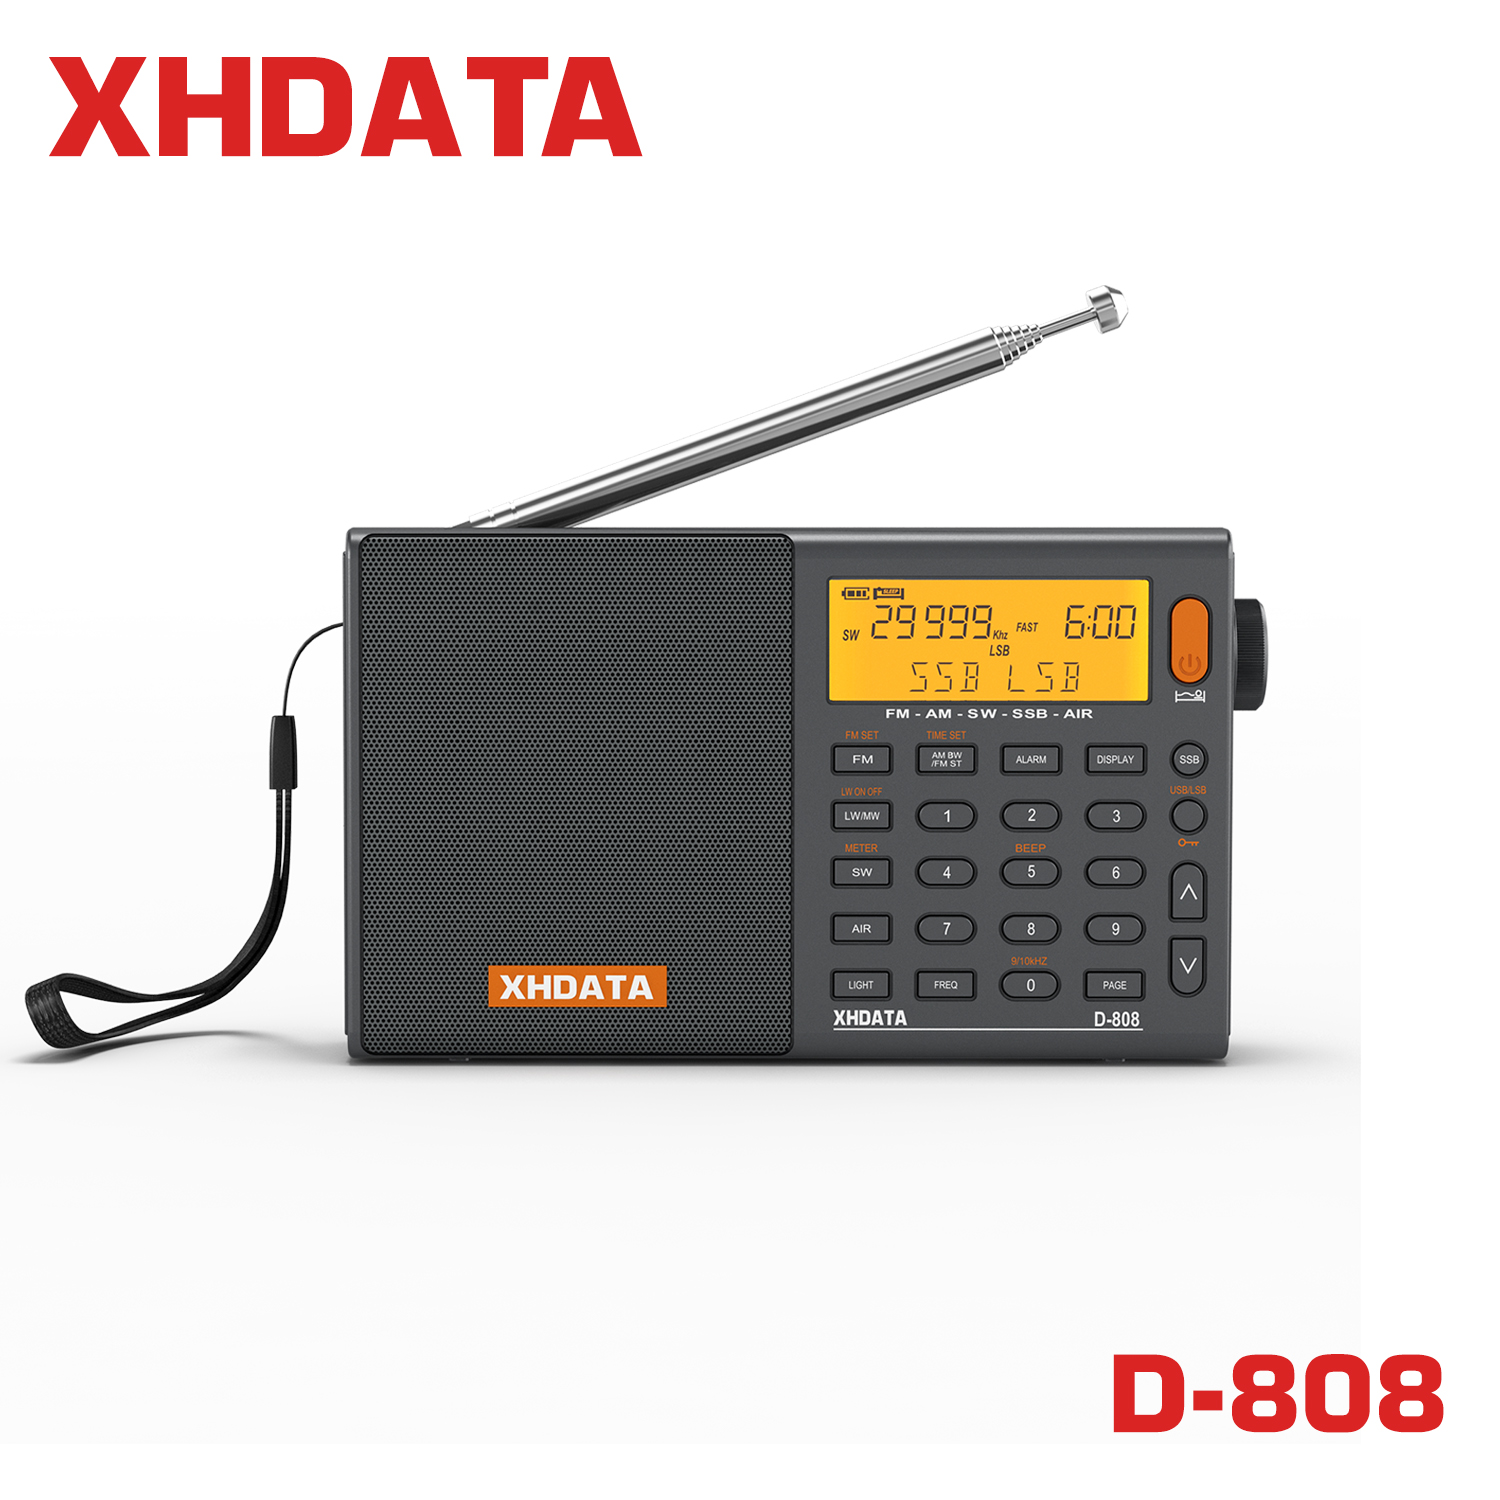 XHDATA D-808